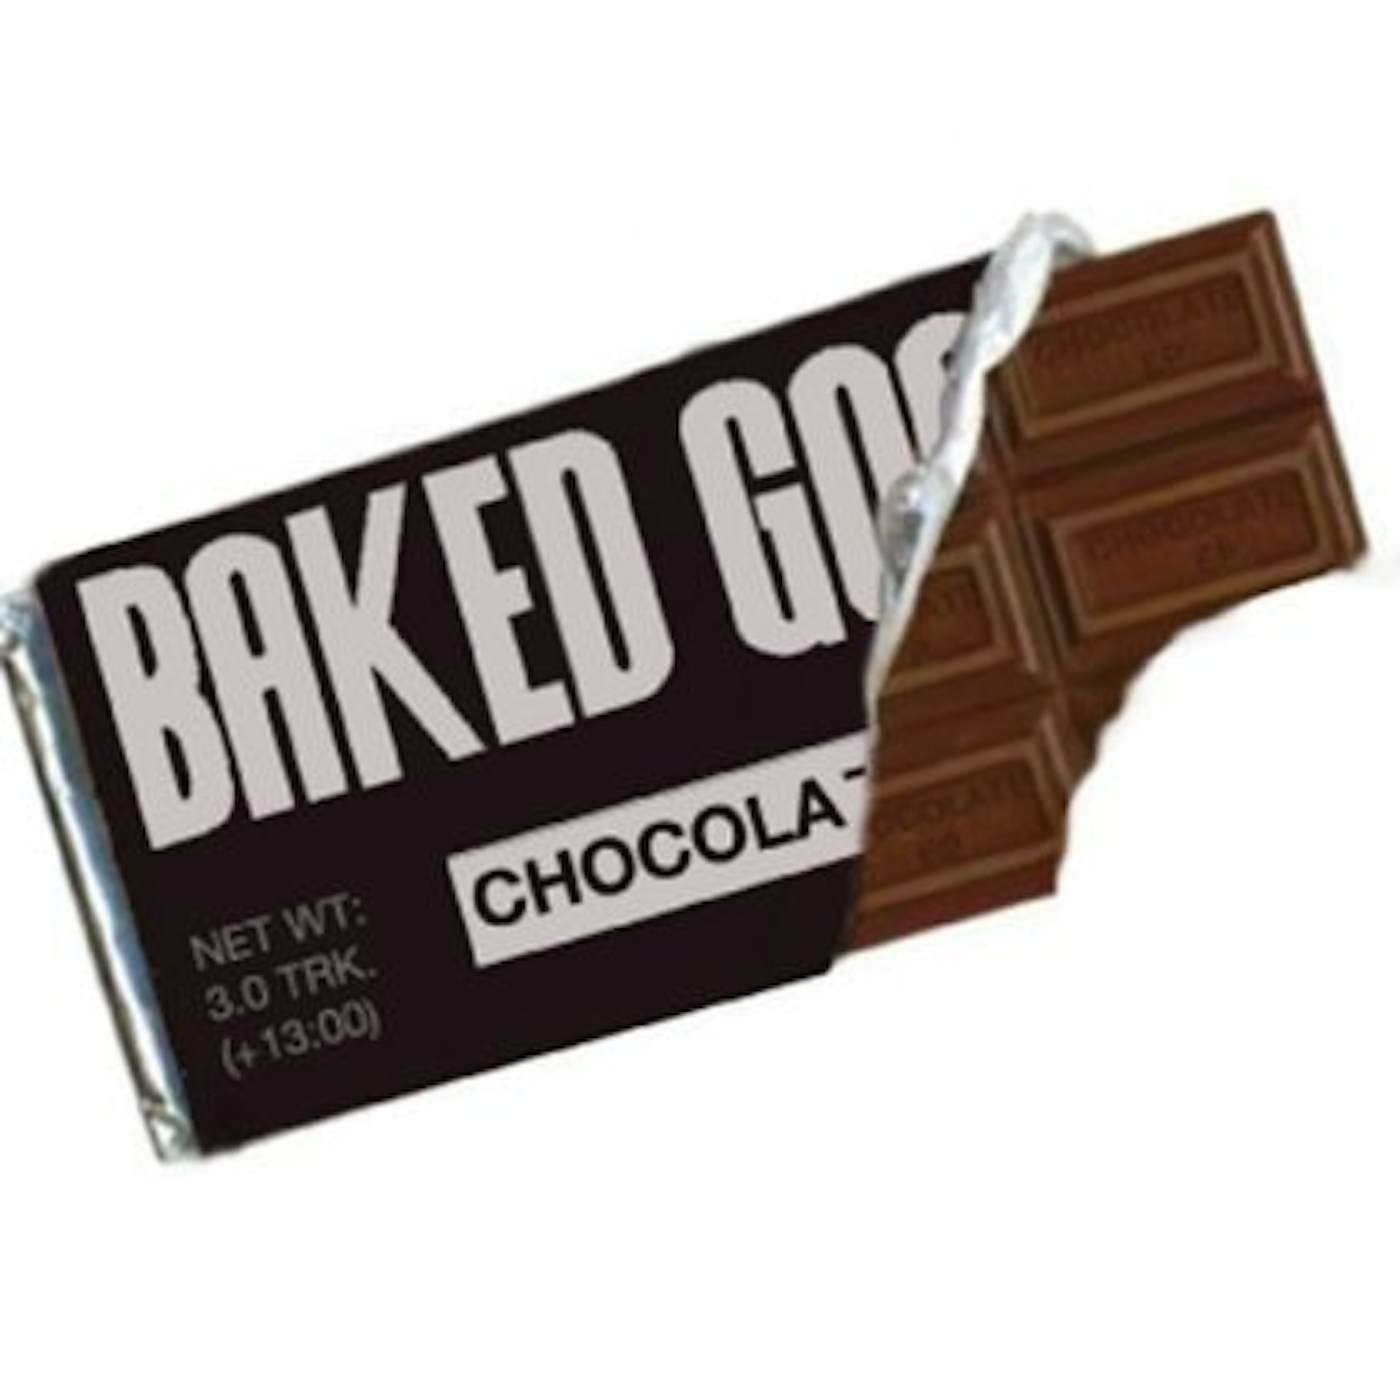 Baked Goods CHOCOLATE EP CD